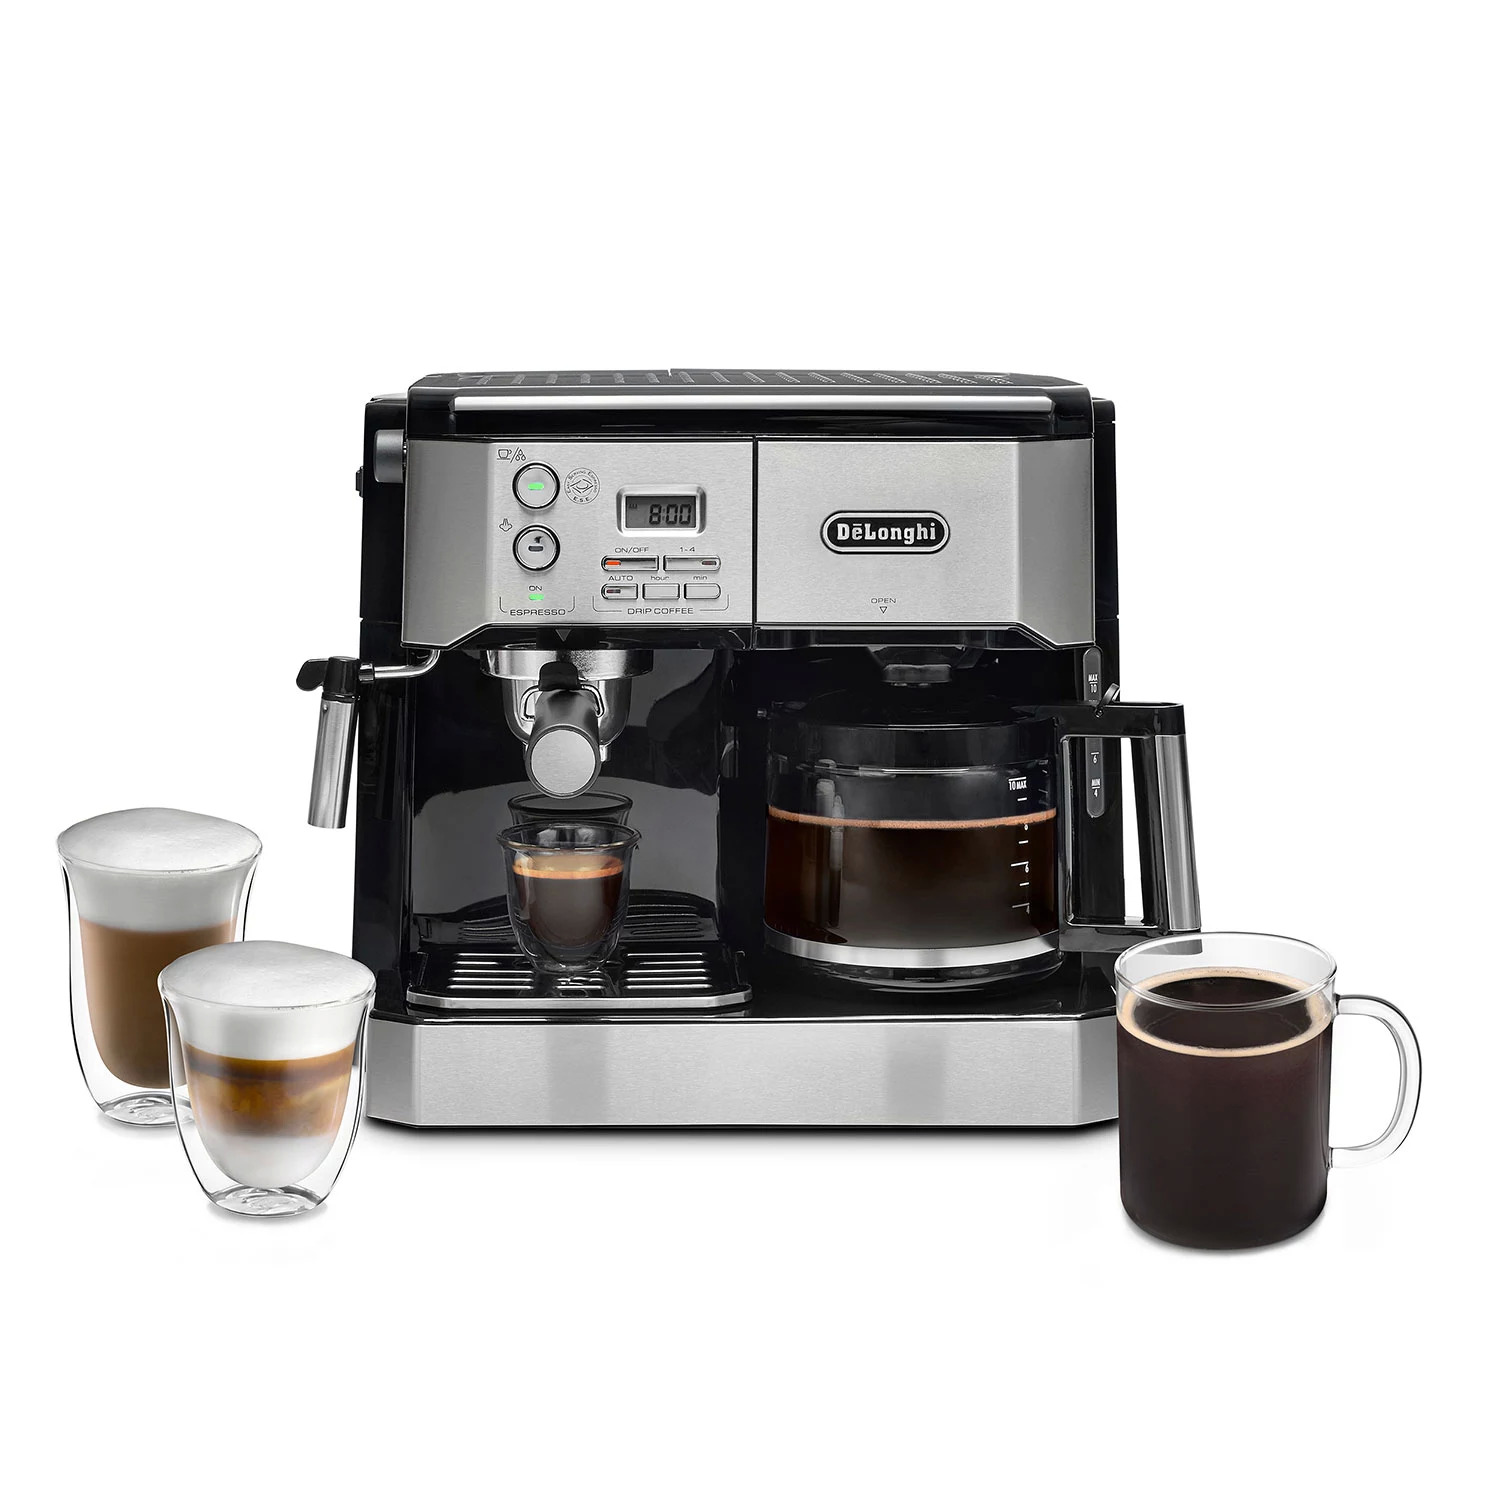 De'Longhi All-In-One Pump Espresso & 10-Cup Drip Coffee Machine with Advanced Cappuccino System $149.98 at Sam's Club